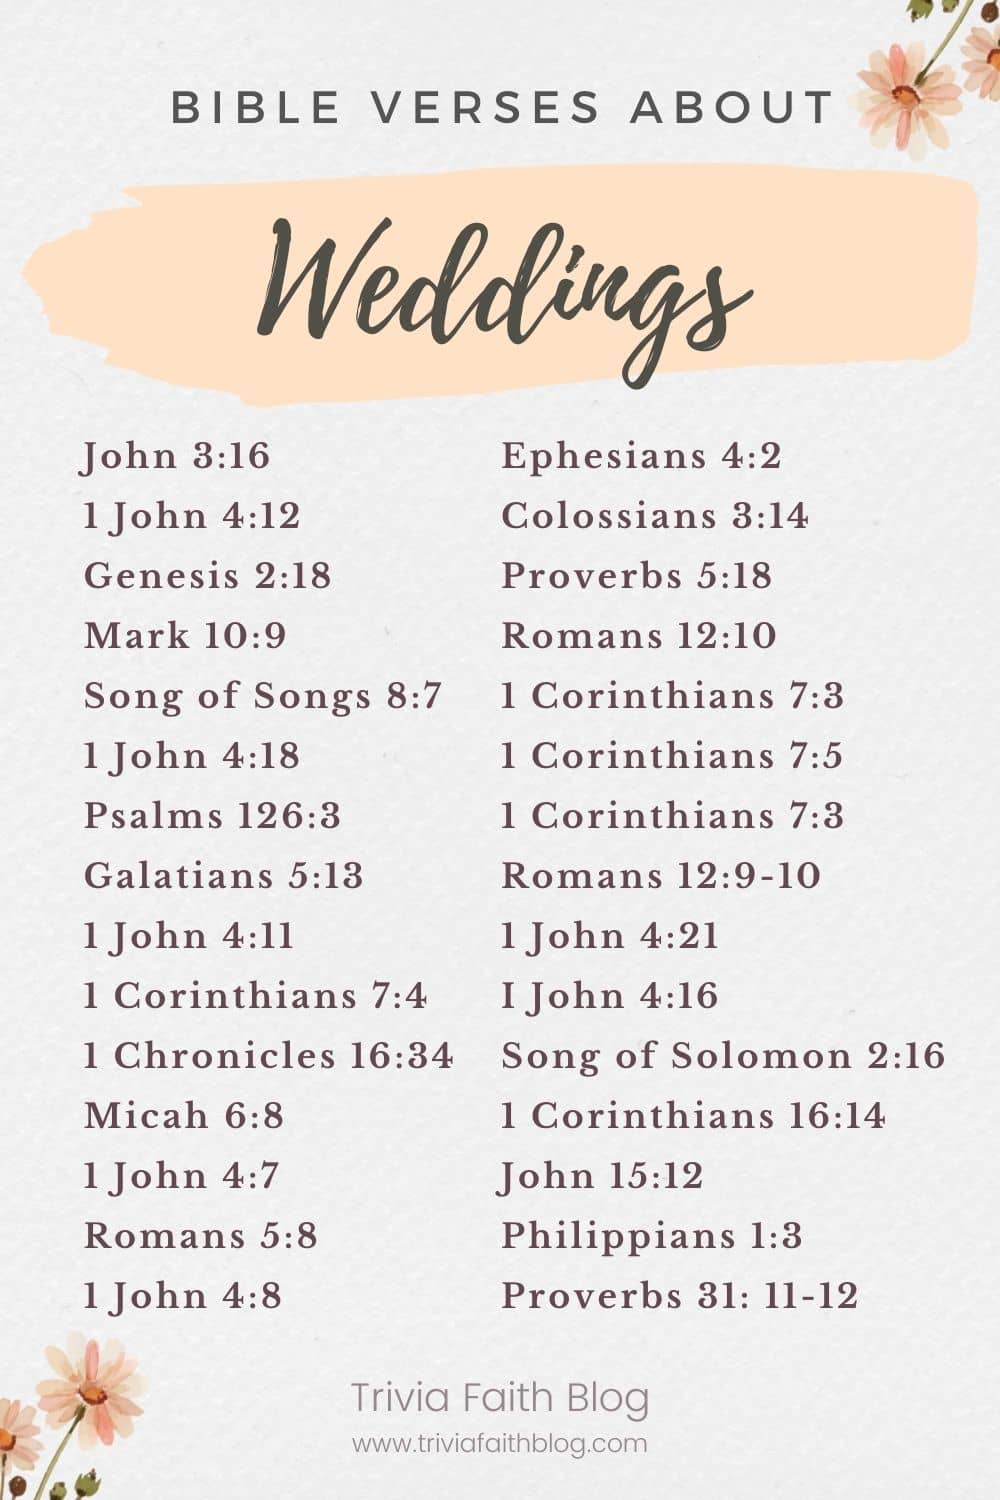 Bible verses for weddings